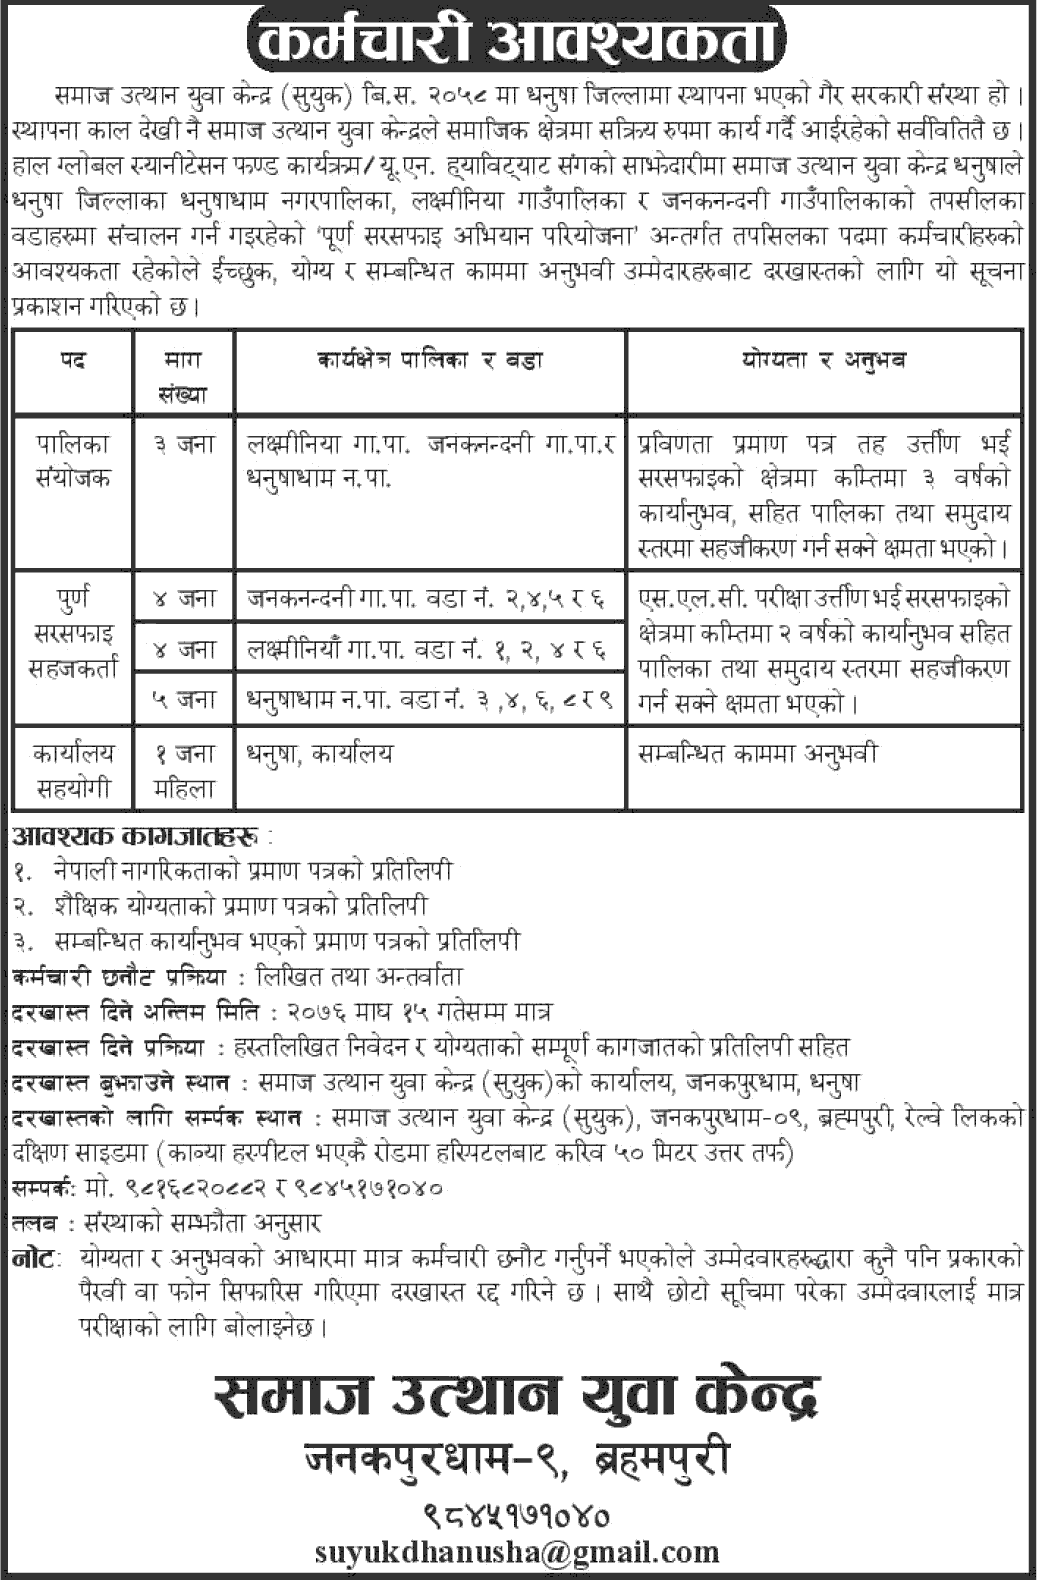 Samaj Utthan Kendra Vacancy for Various Position